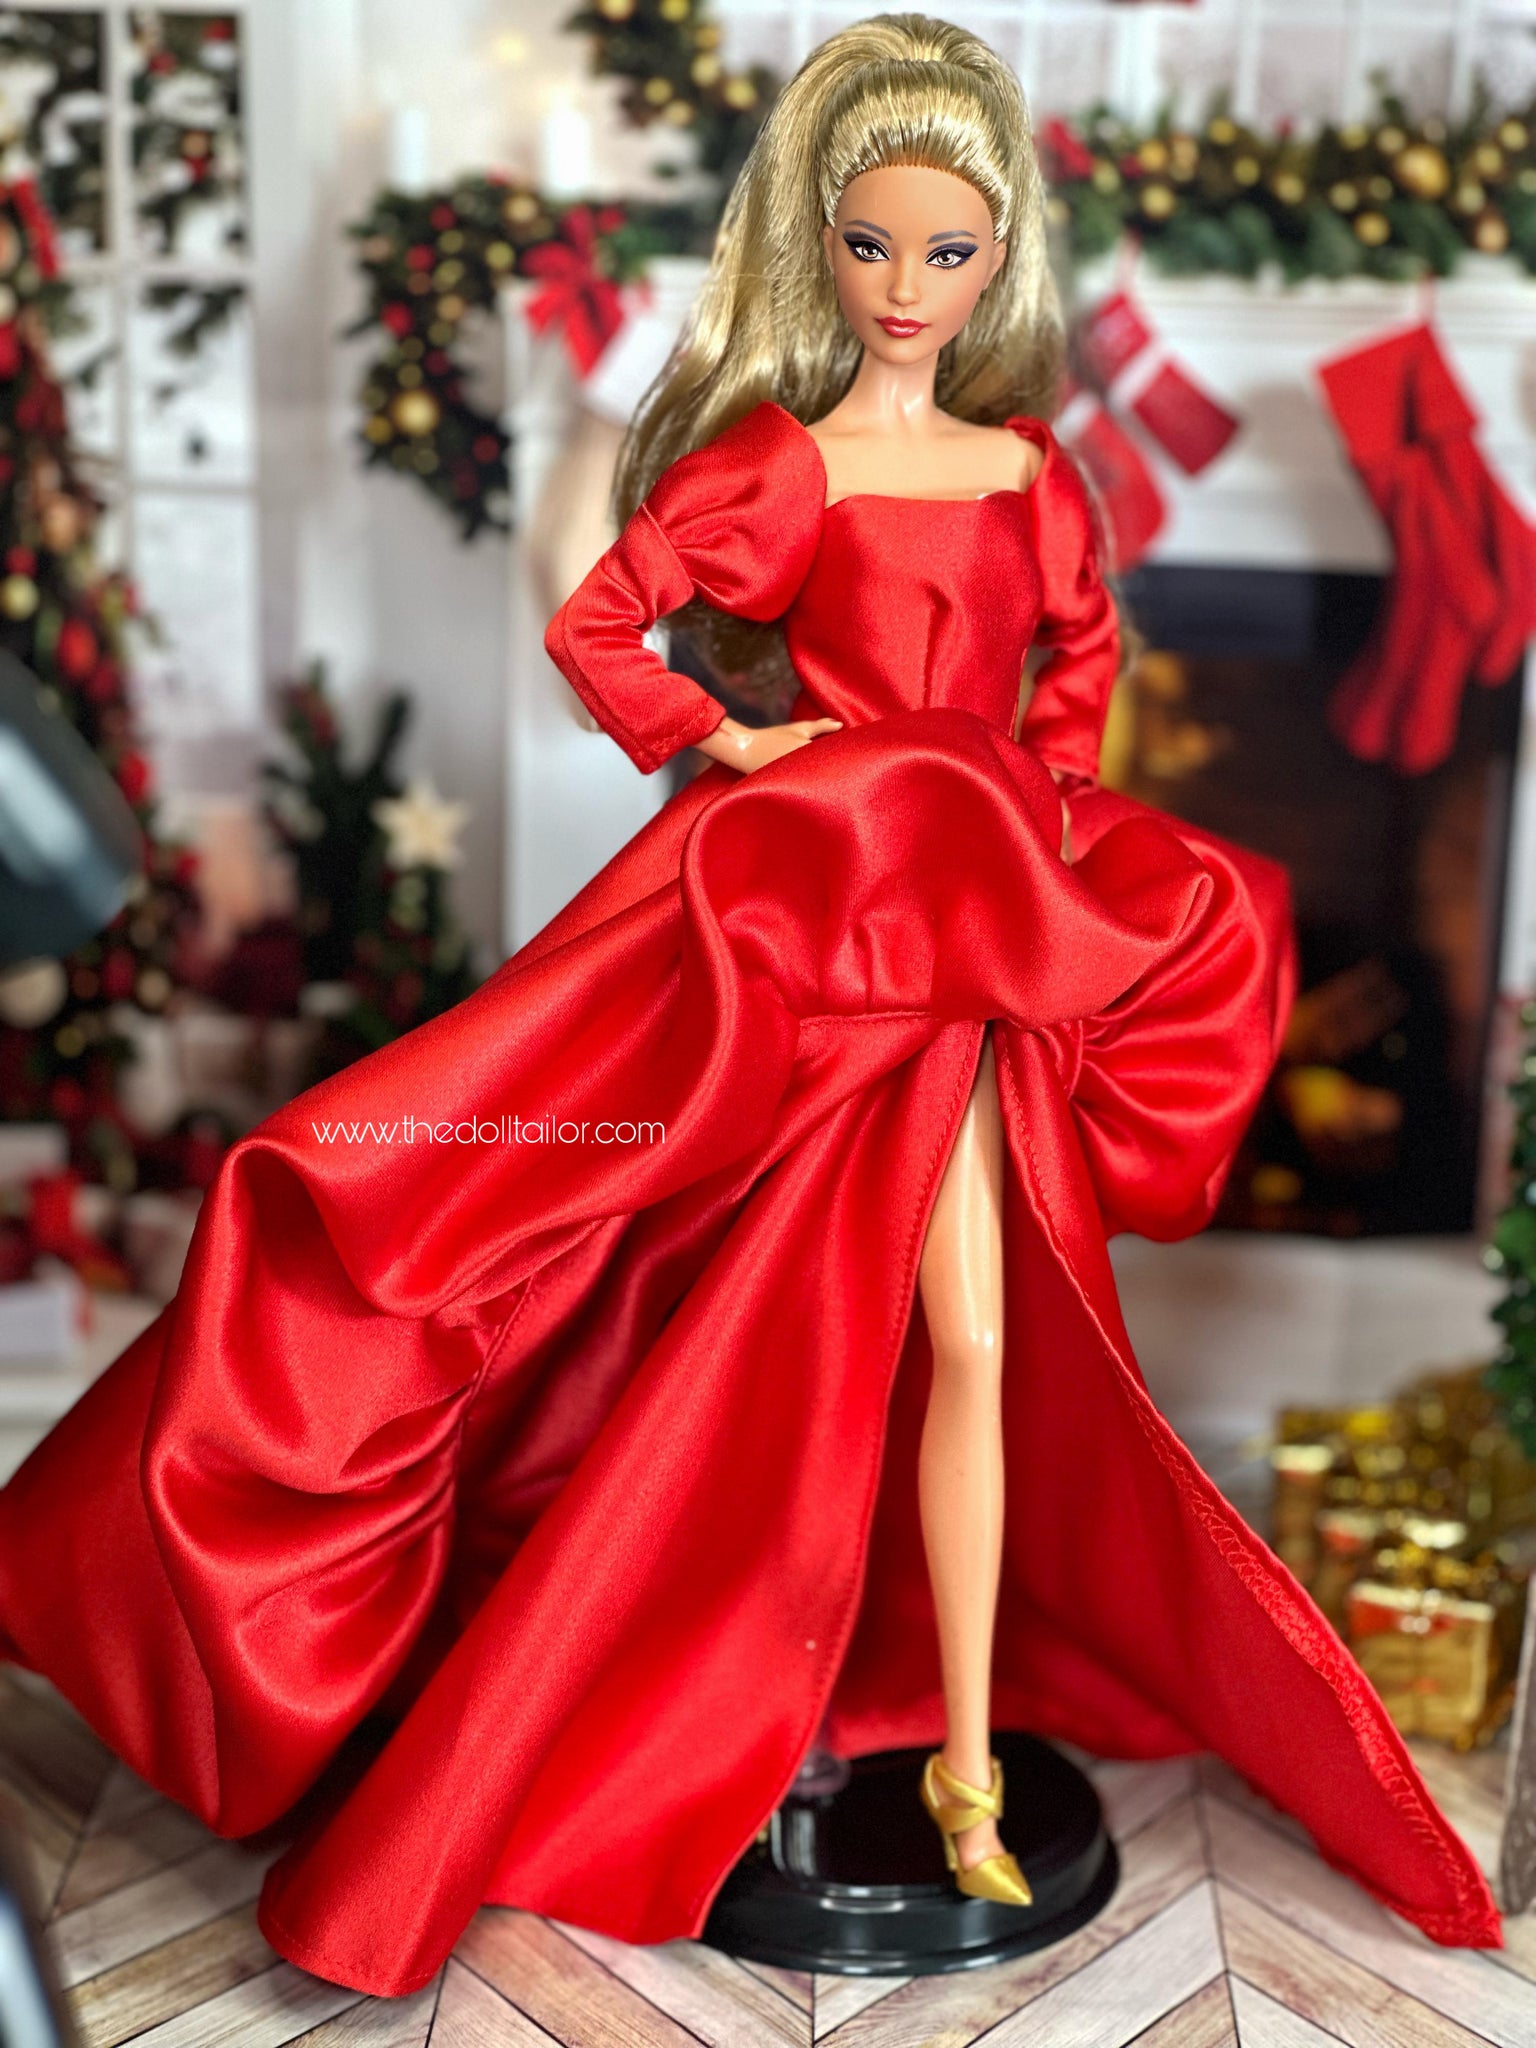 New Dress for sell EFDD | Barbie gowns, Doll dress, Barbie dress